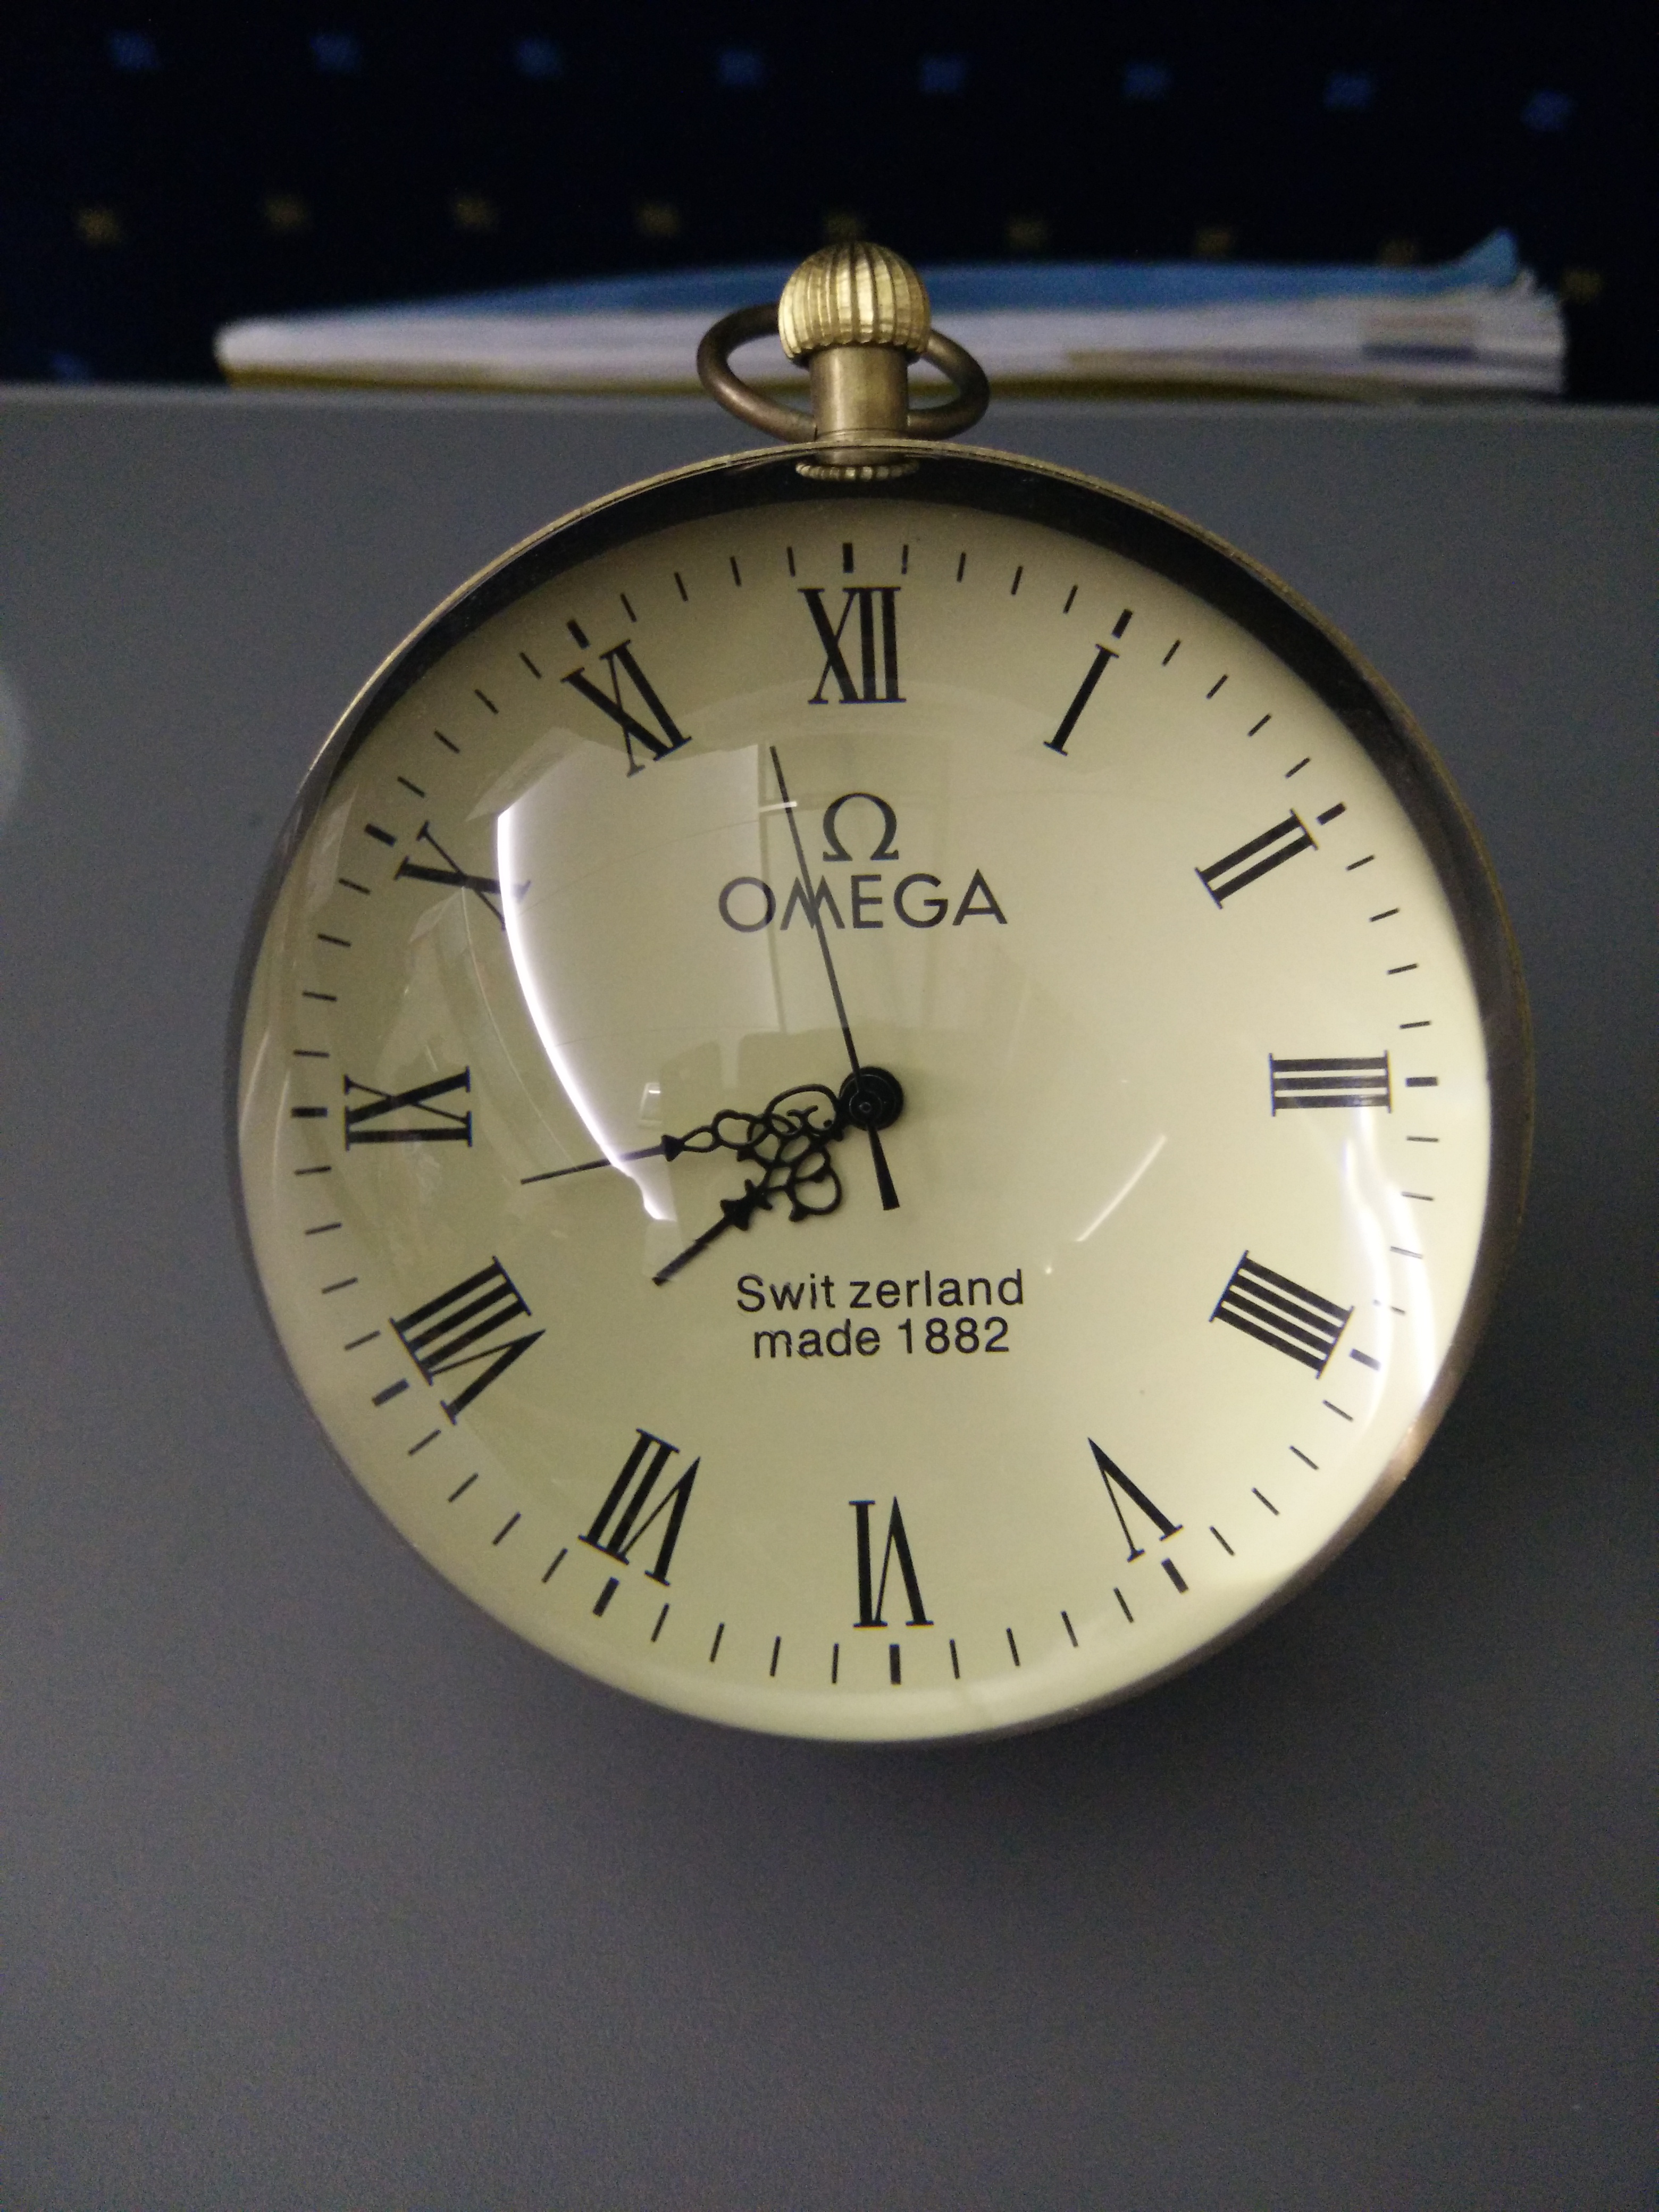 omega pocket watch 1882 price